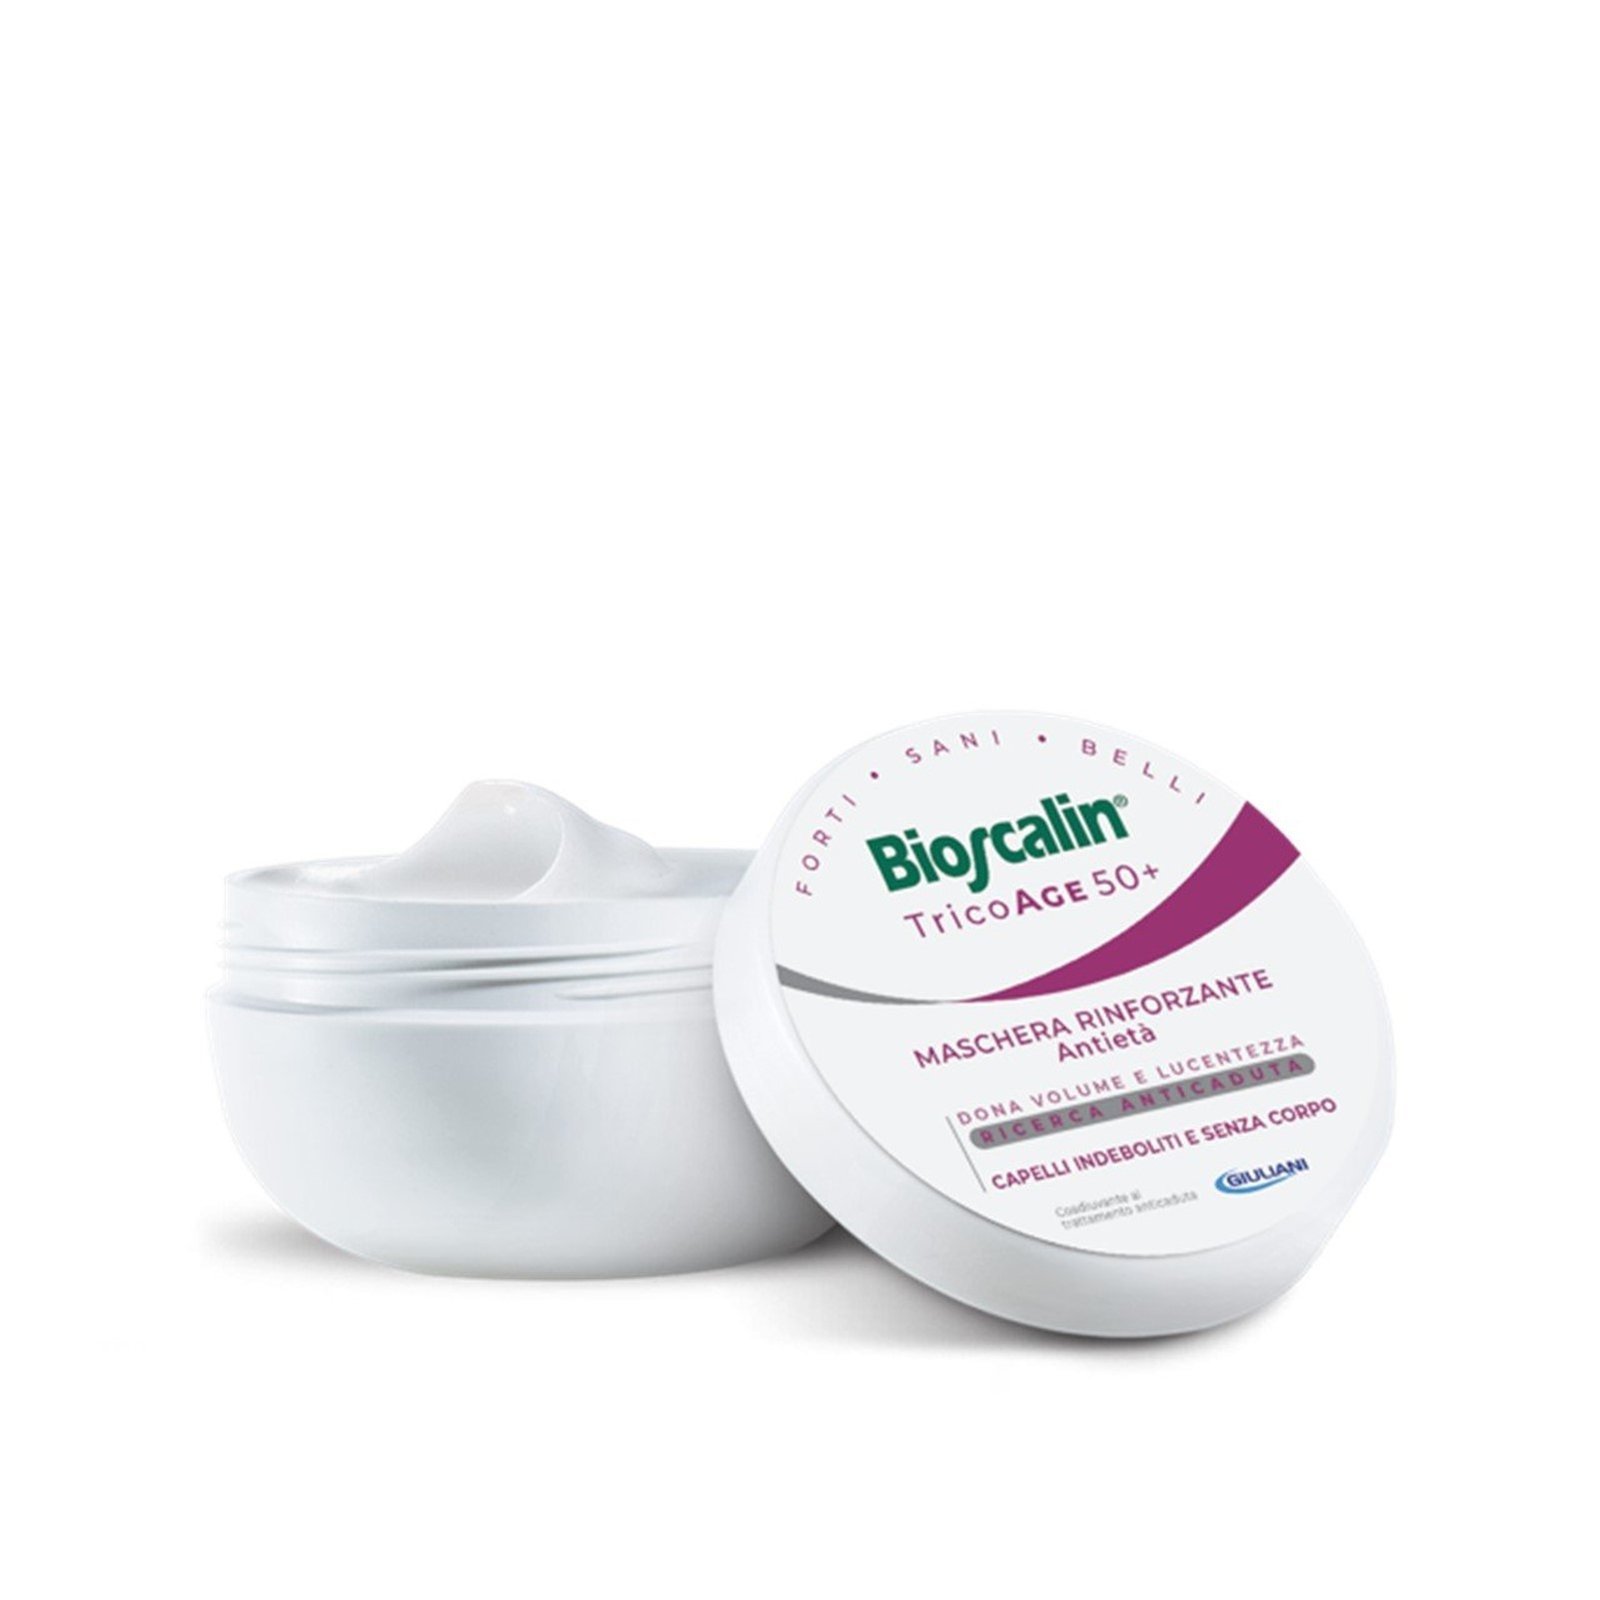 Bioscalin TricoAge 50+ Anti-Aging Fortifying Mask 200ml